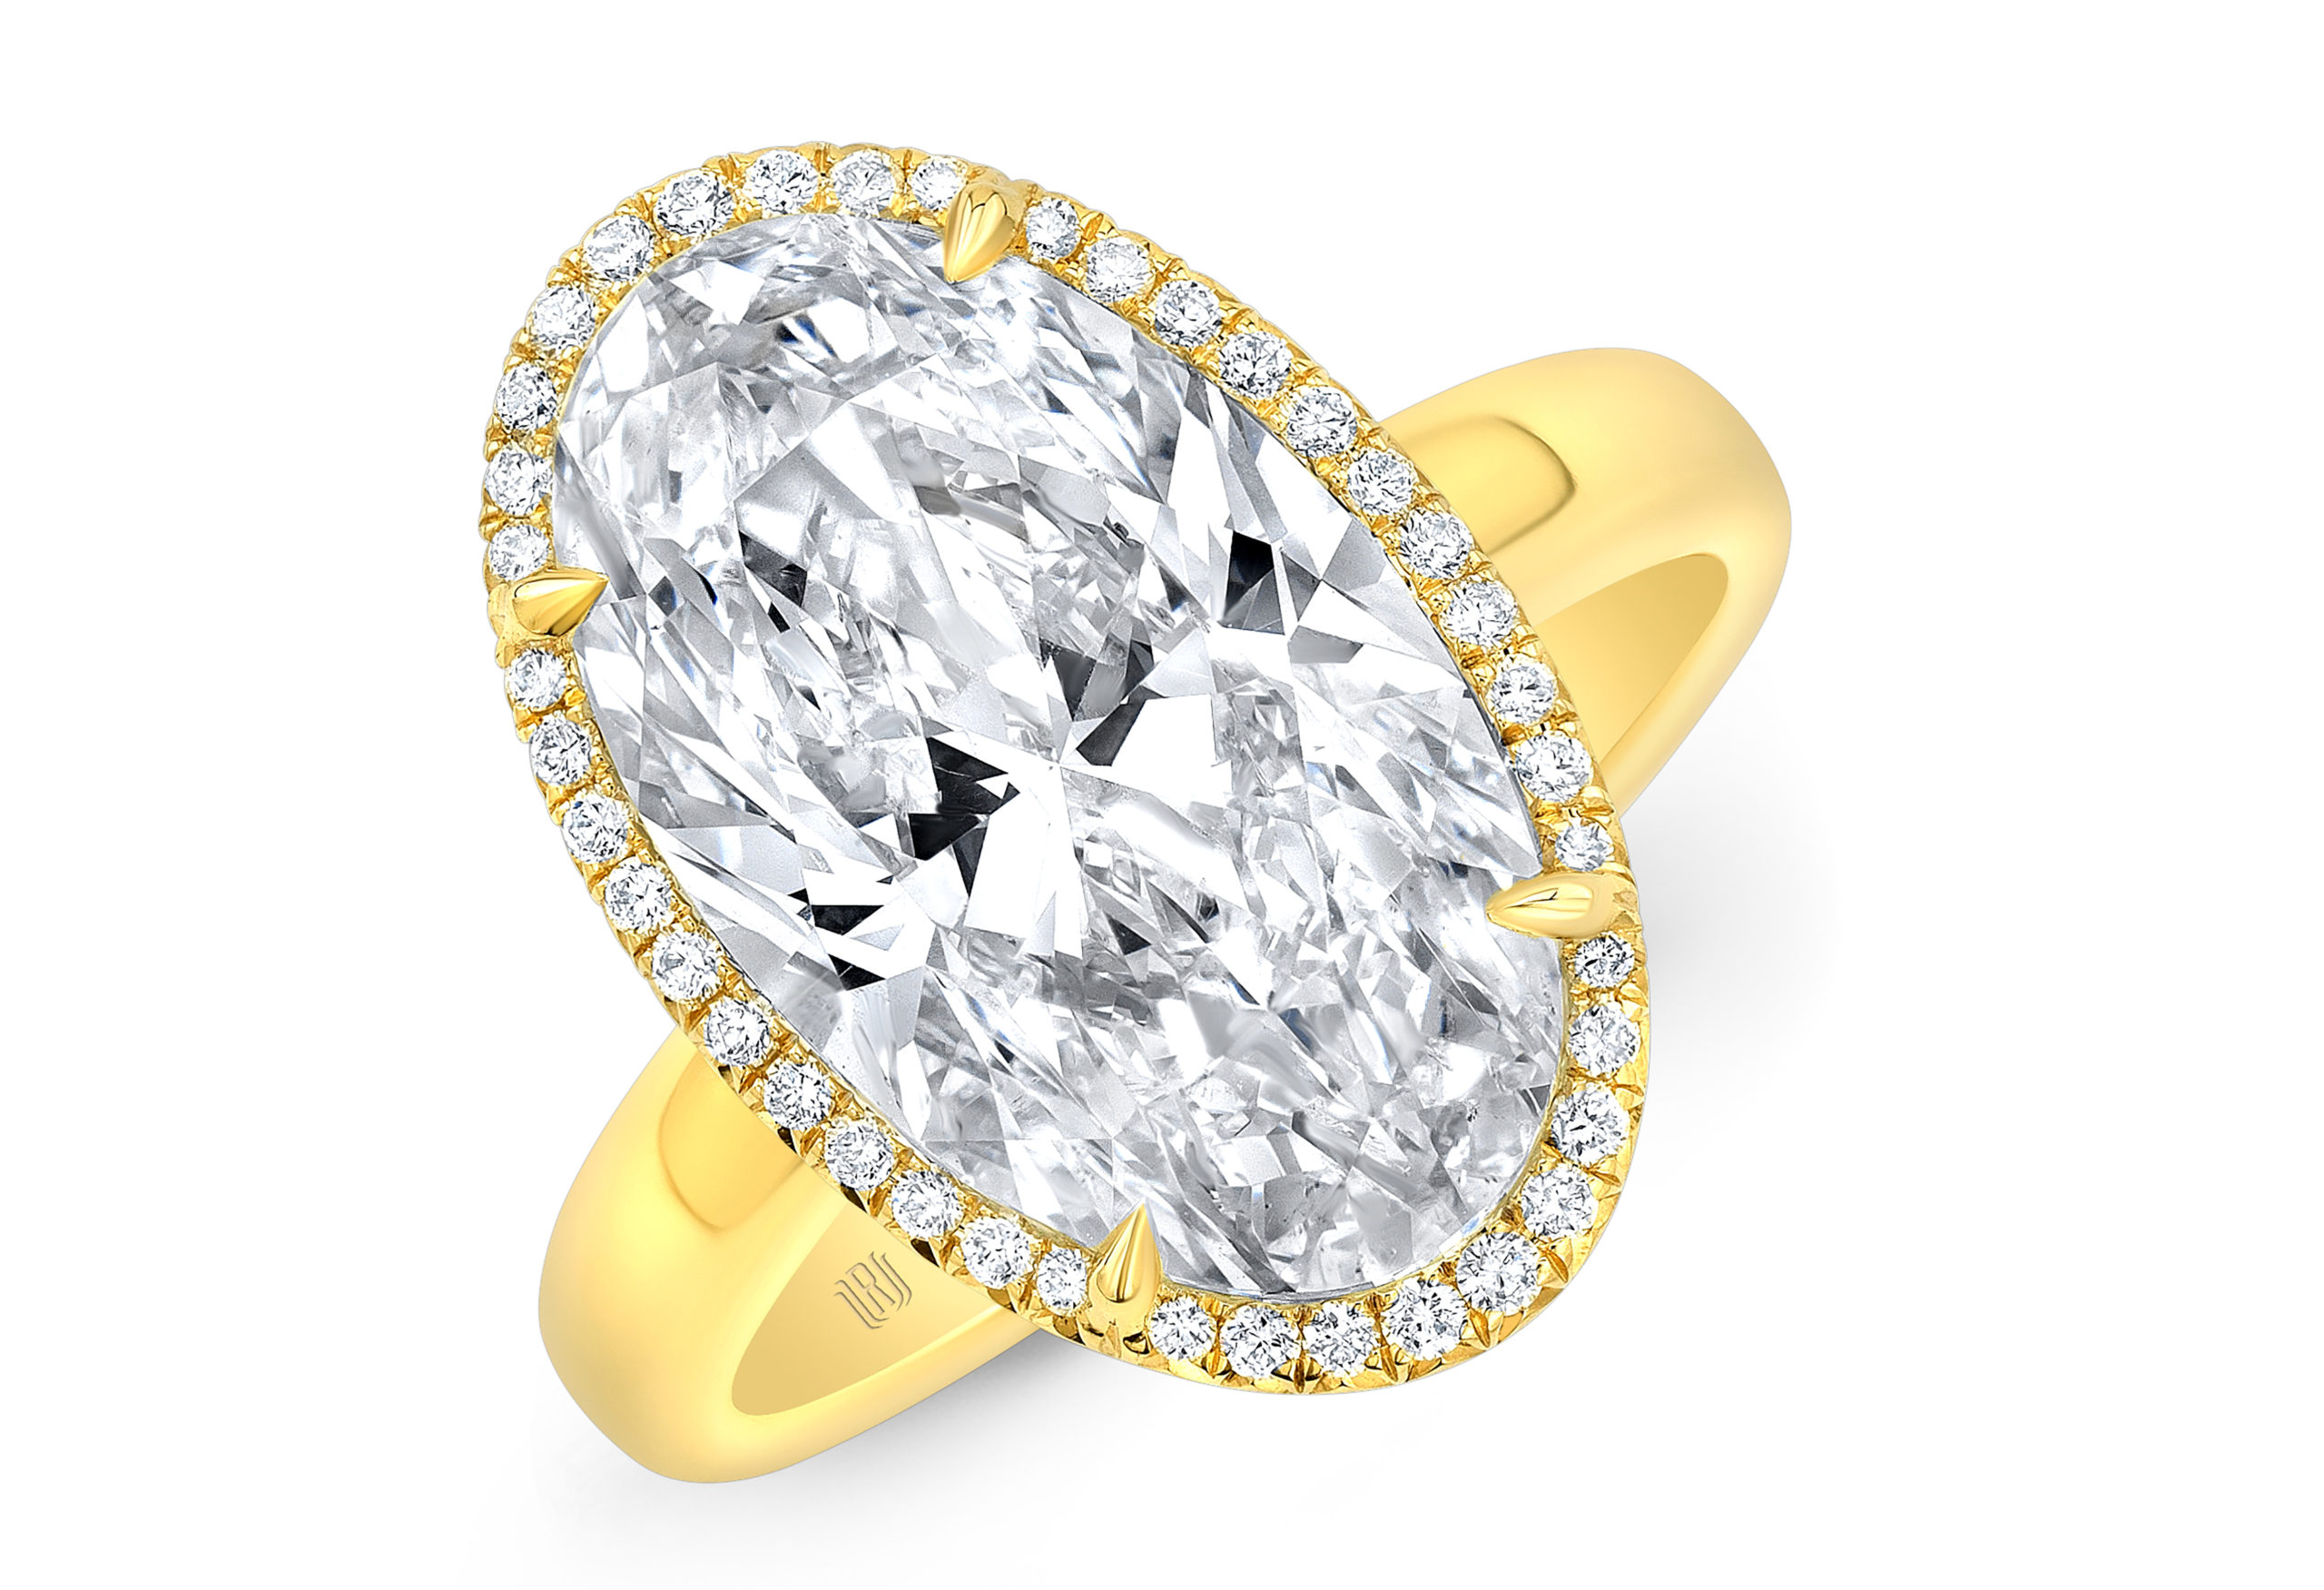 INSTORE Design Awards 2022 – Engagement/Wedding Jewelry Over $5,000